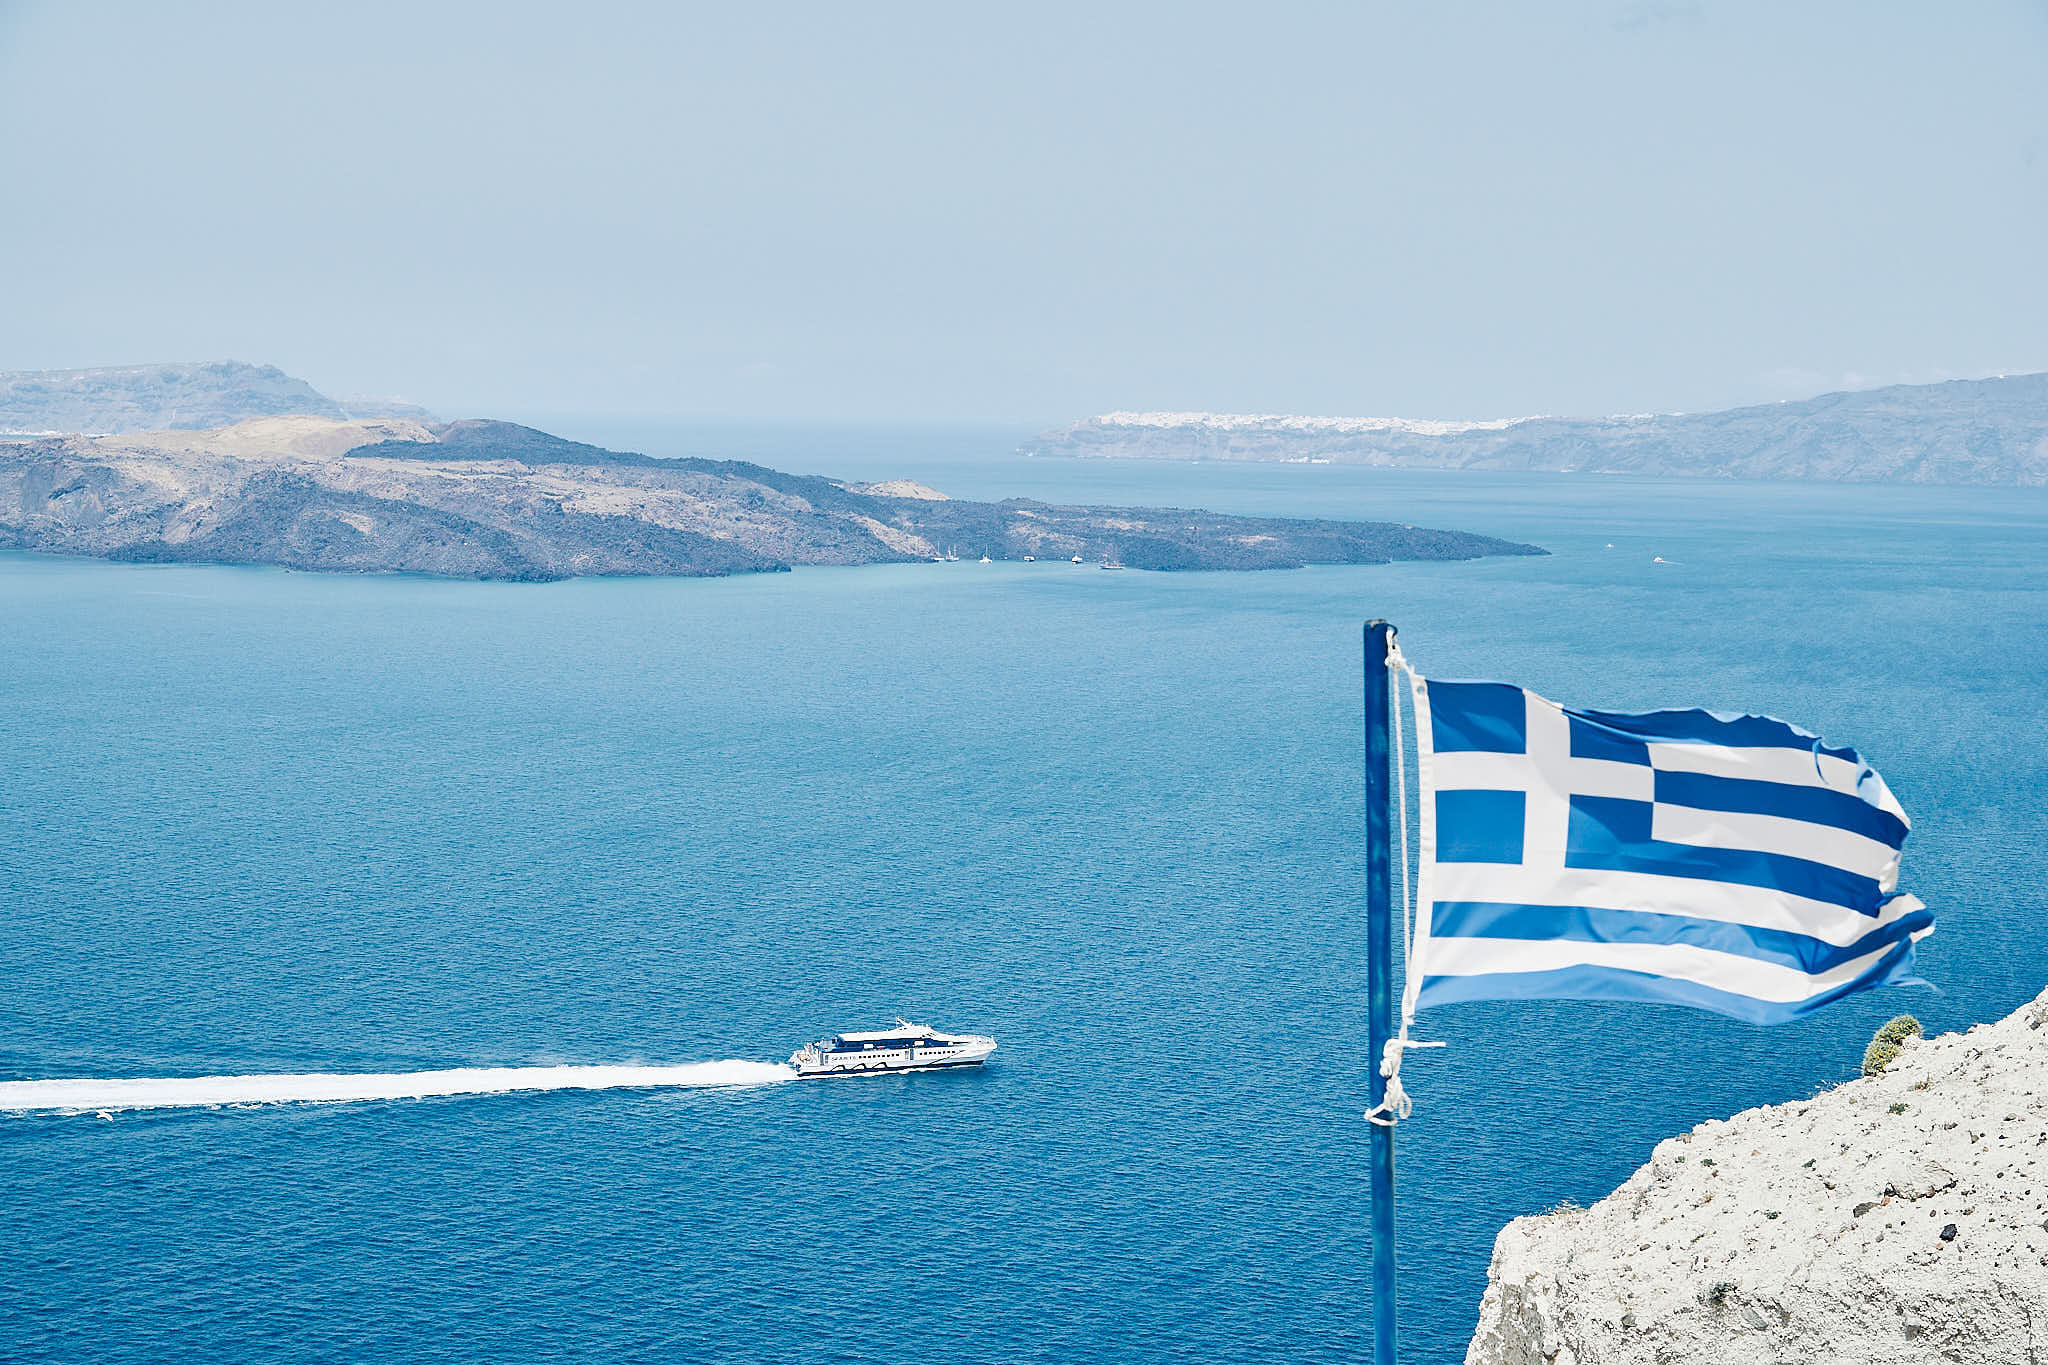 Greece 希臘｜The Heart of Santorini｜美麗的島嶼懸崖與純白迷你教堂